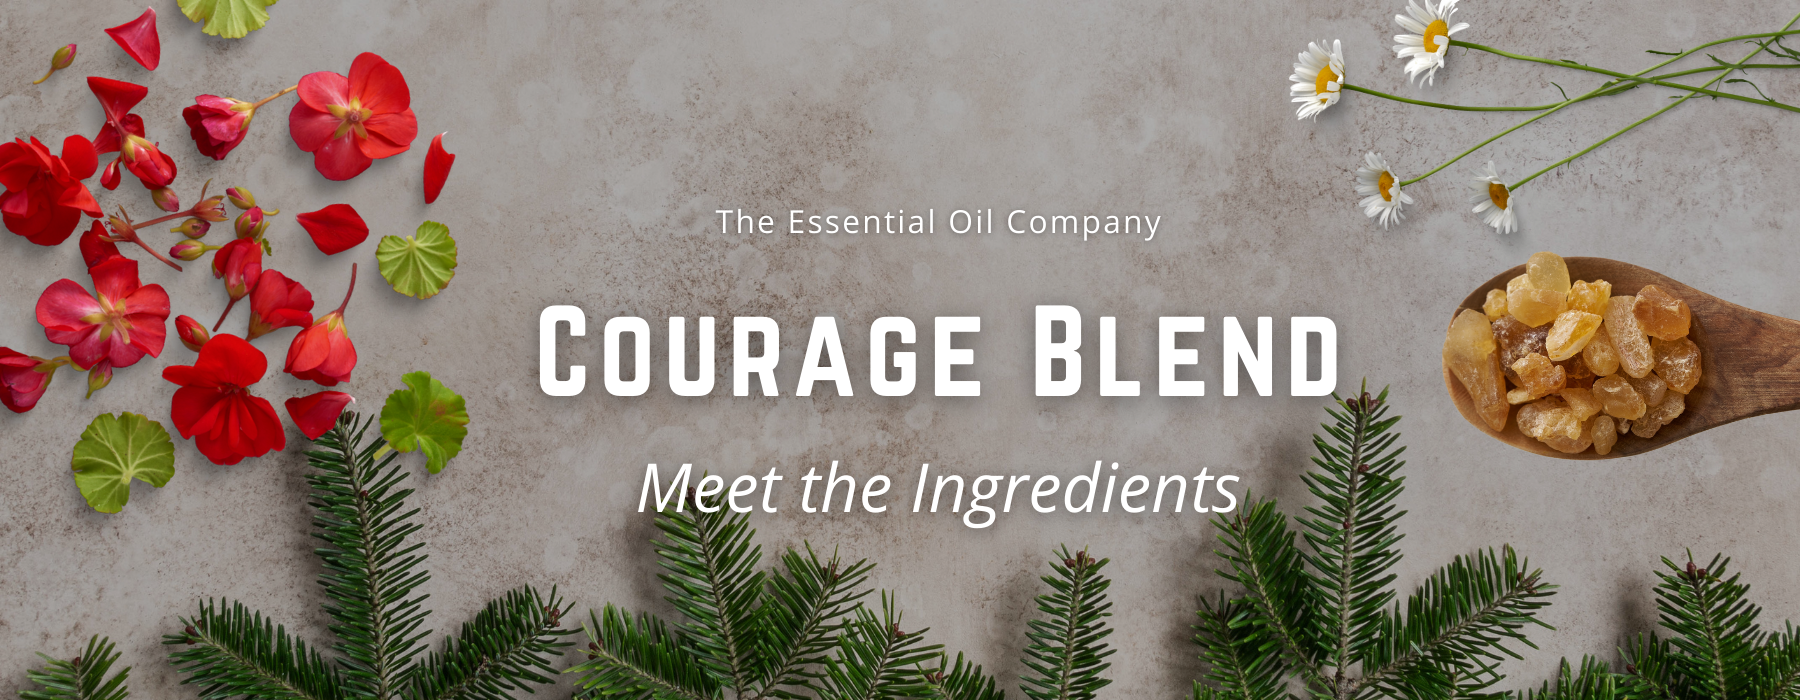 Courage Blend: Meet the Ingredients